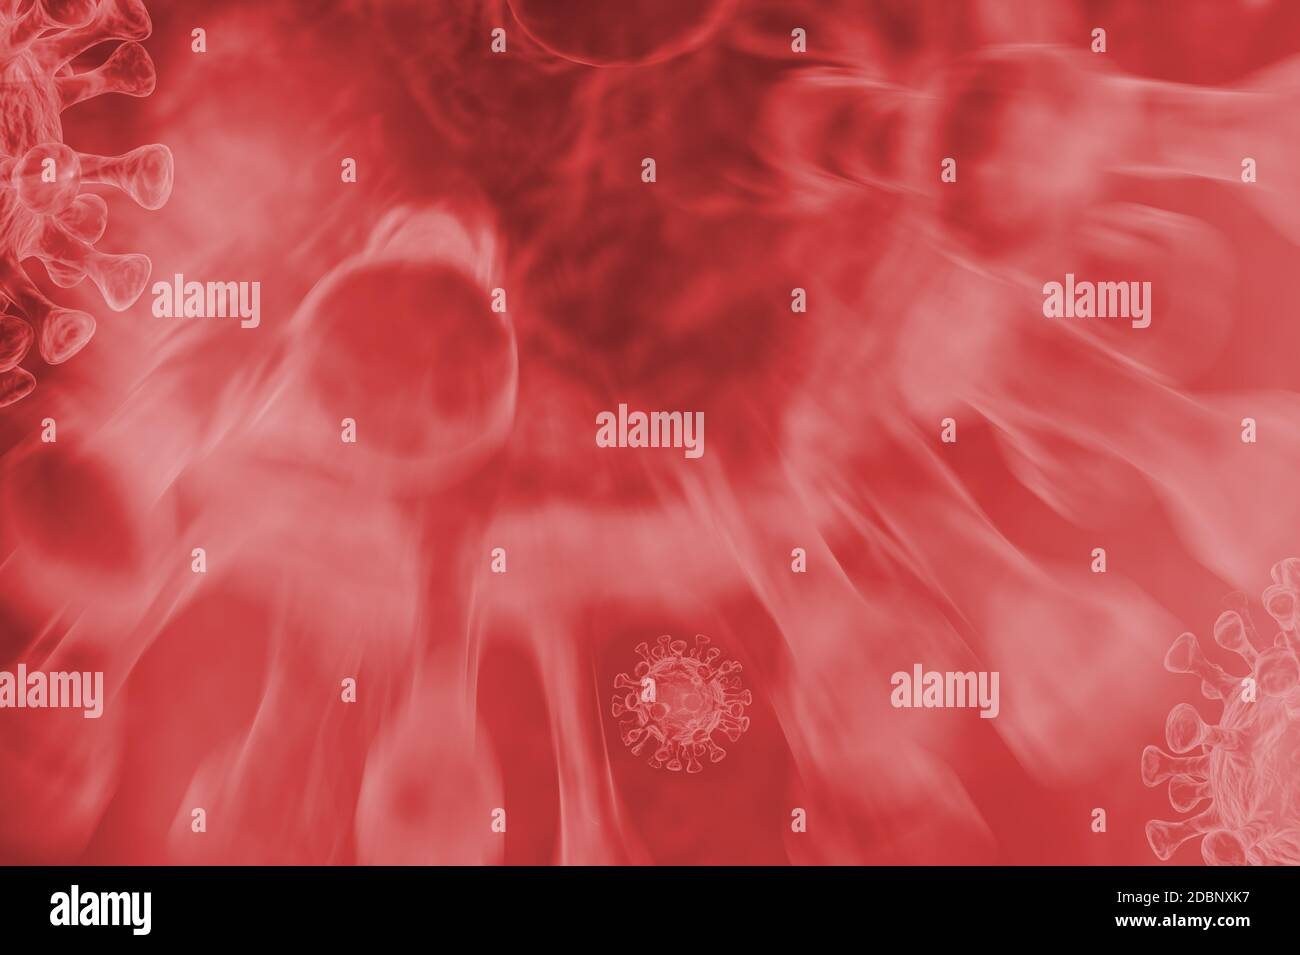 Bakterien, Zellen 3D-Rendering auf rotem Hintergrund. Coronavirus 2019-nCov neuartiges Coronavirus-Konzept. bew viren mit unschärfe. mikrobe wallpaper Stock Photo